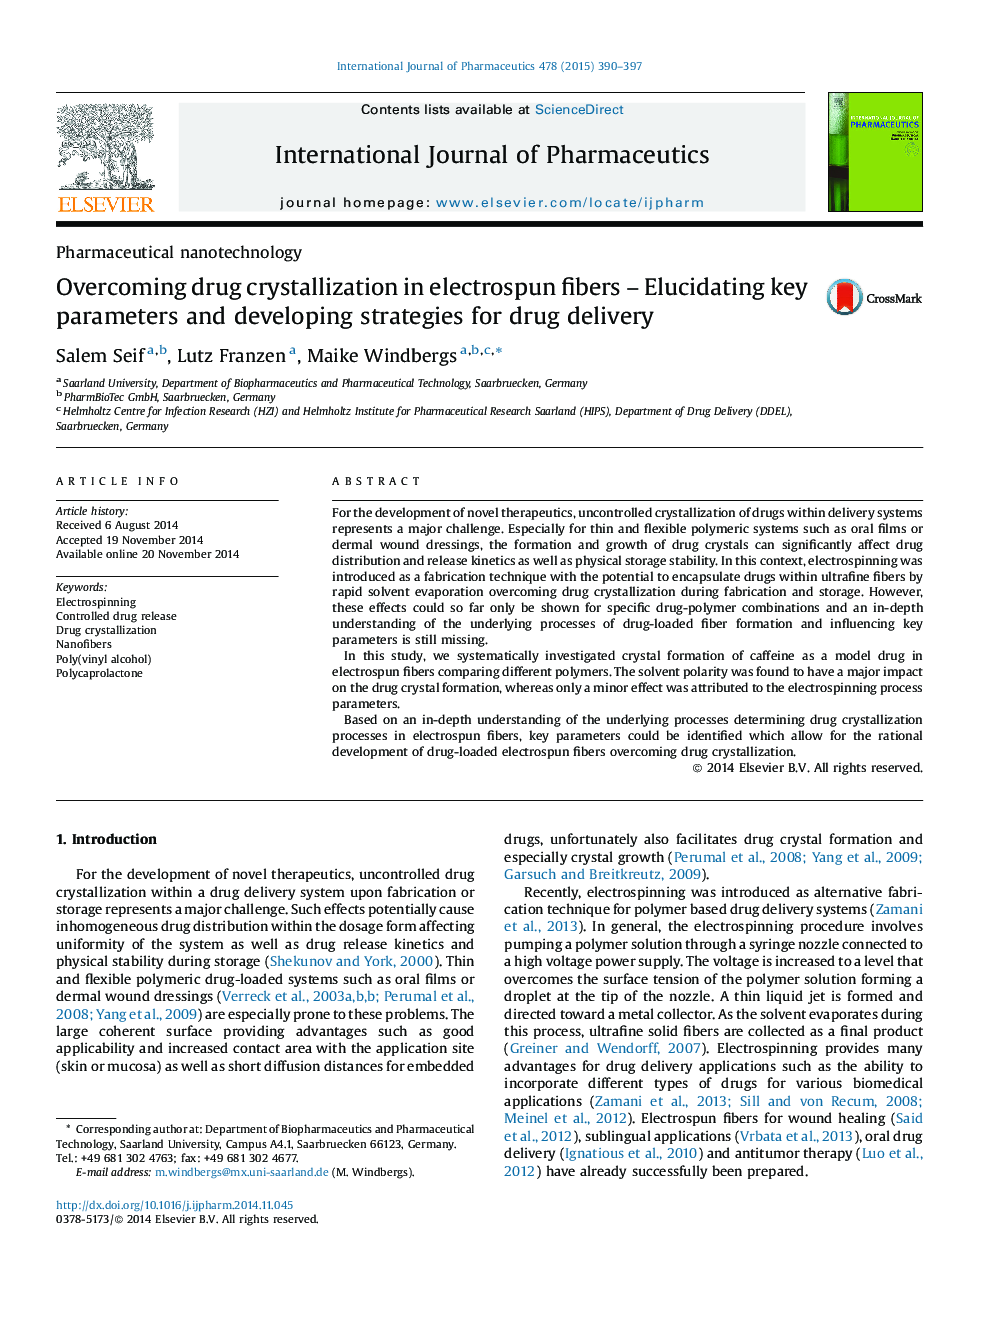 Overcoming drug crystallization in electrospun fibers – Elucidating key parameters and developing strategies for drug delivery